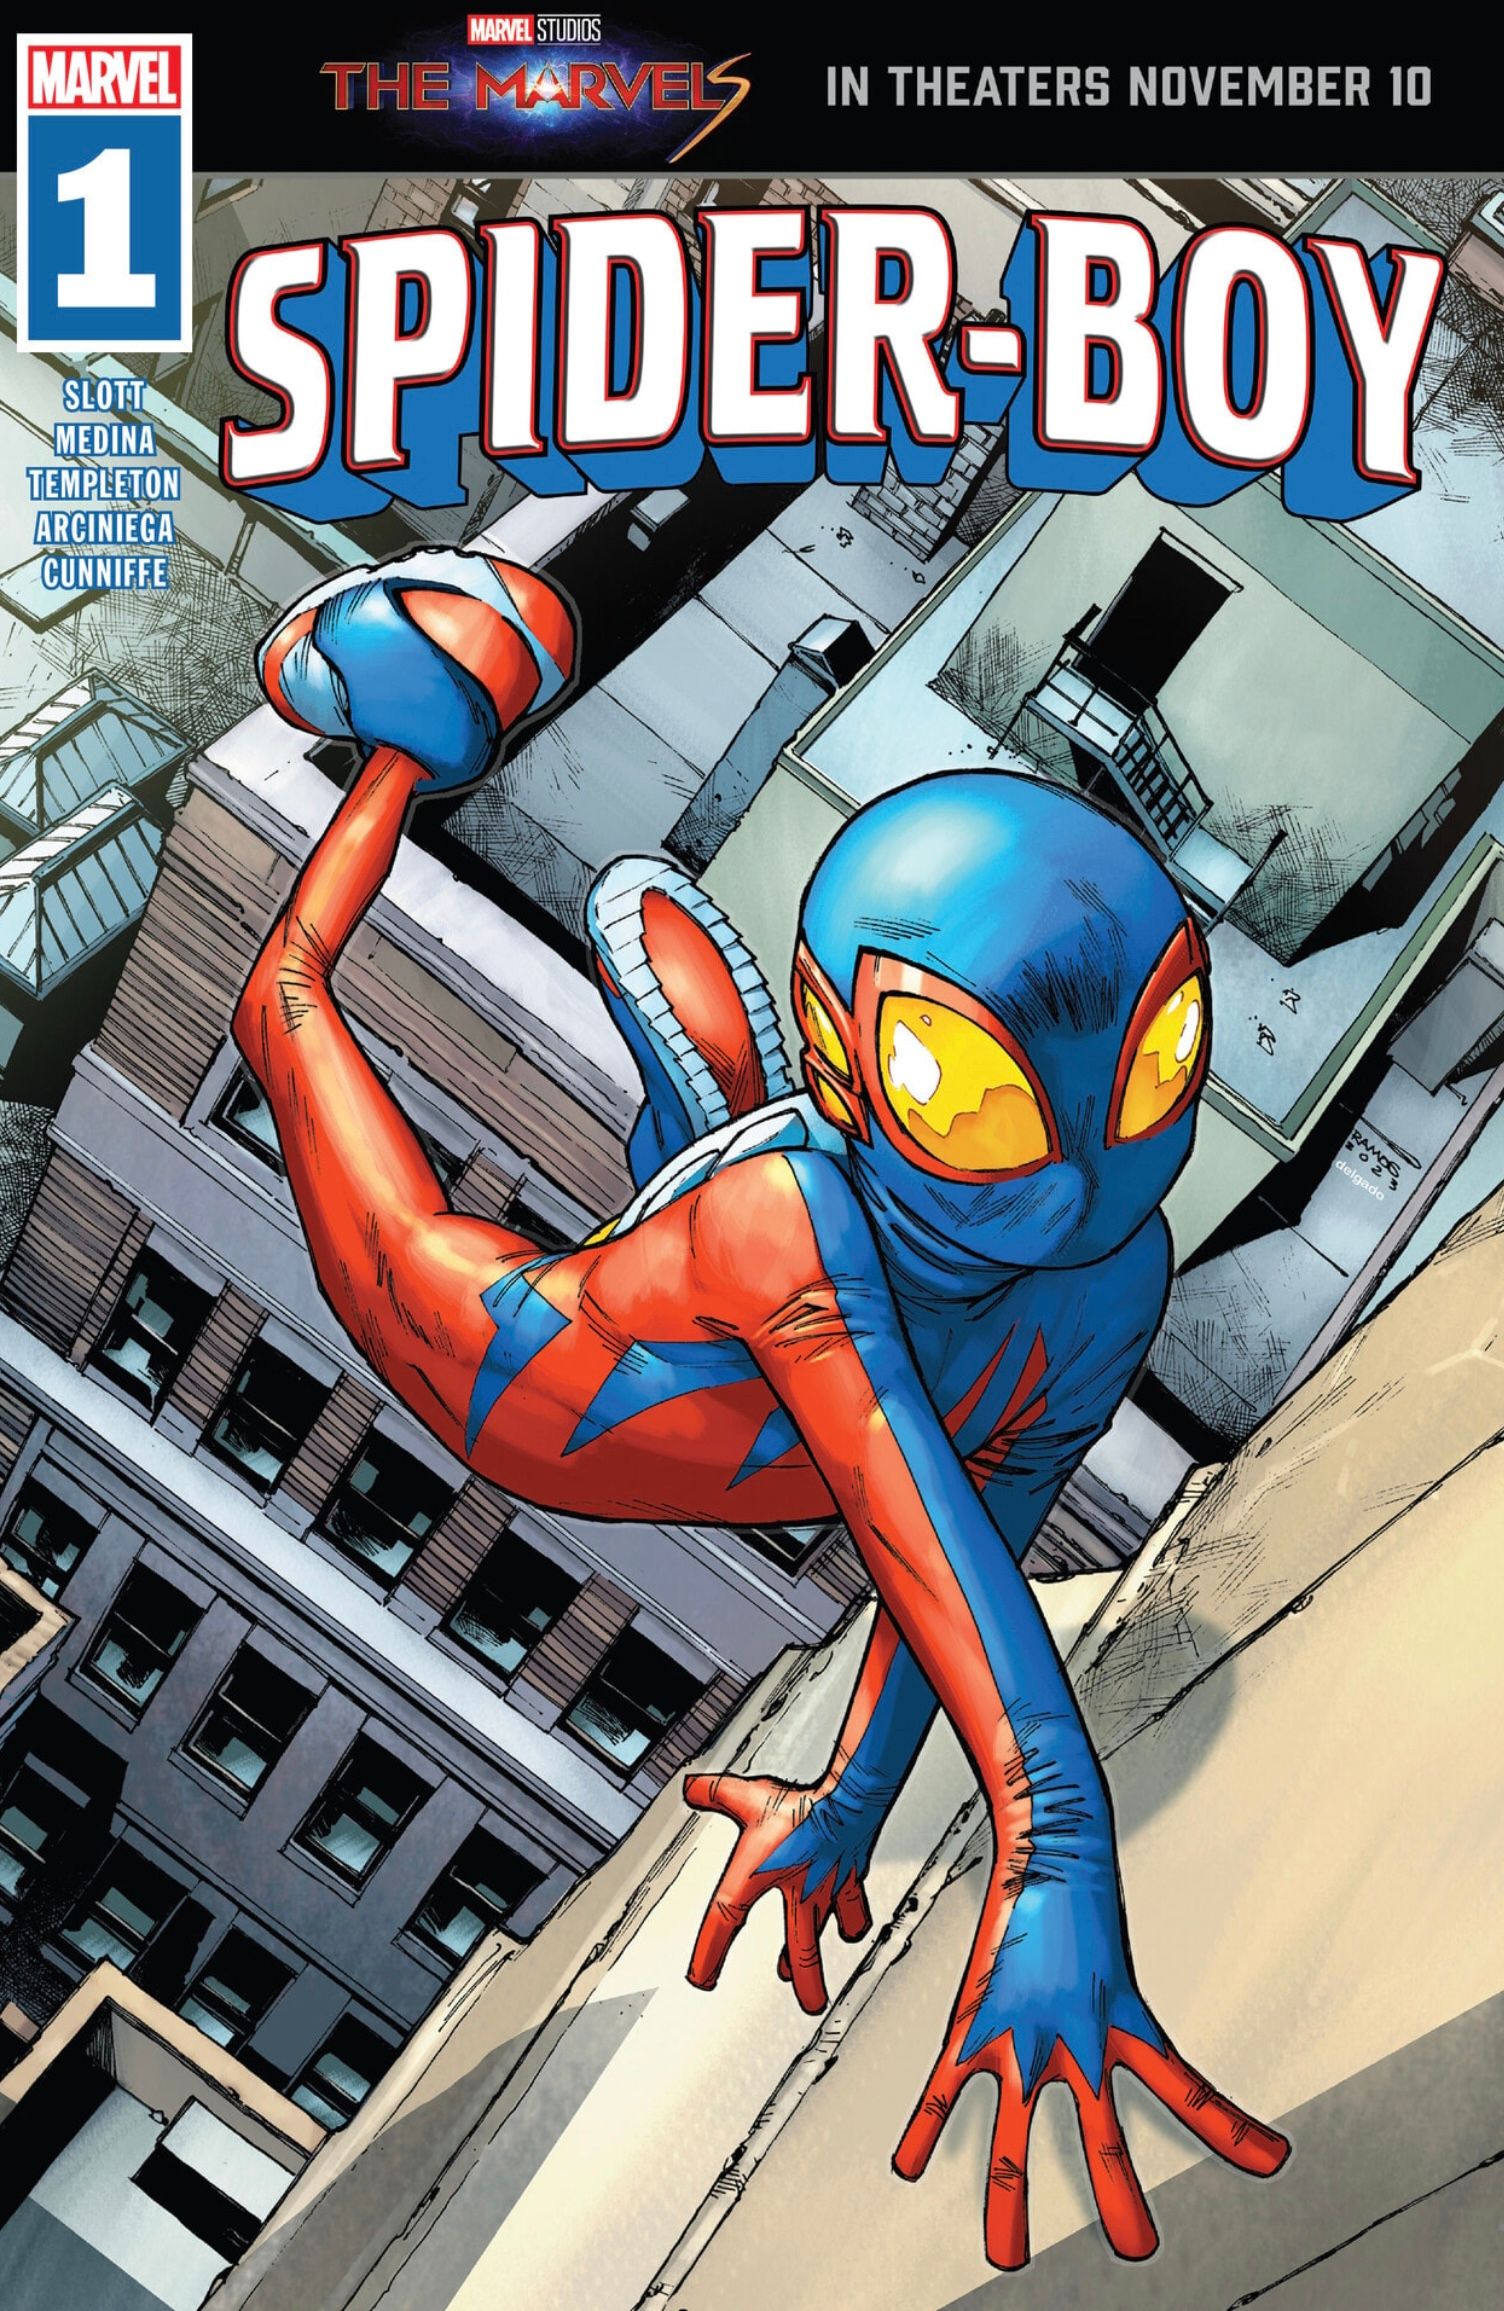 Spider-Boy #1 Cover